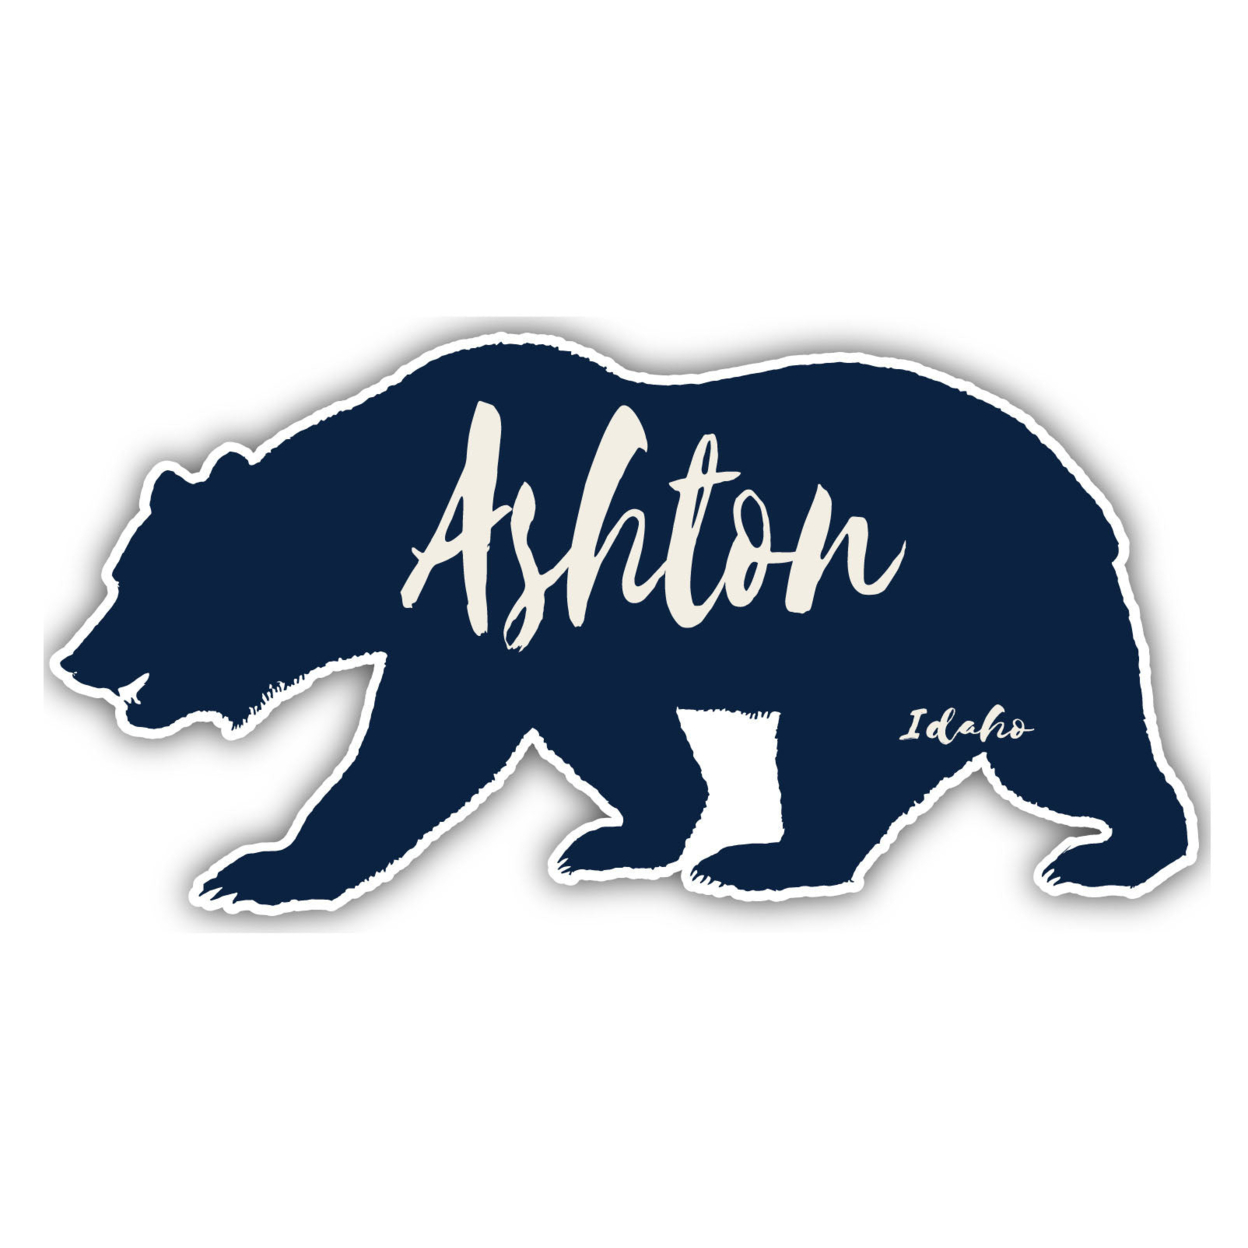 Ashton Idaho Souvenir Decorative Stickers (Choose Theme And Size) - 4-Pack, 4-Inch, Bear